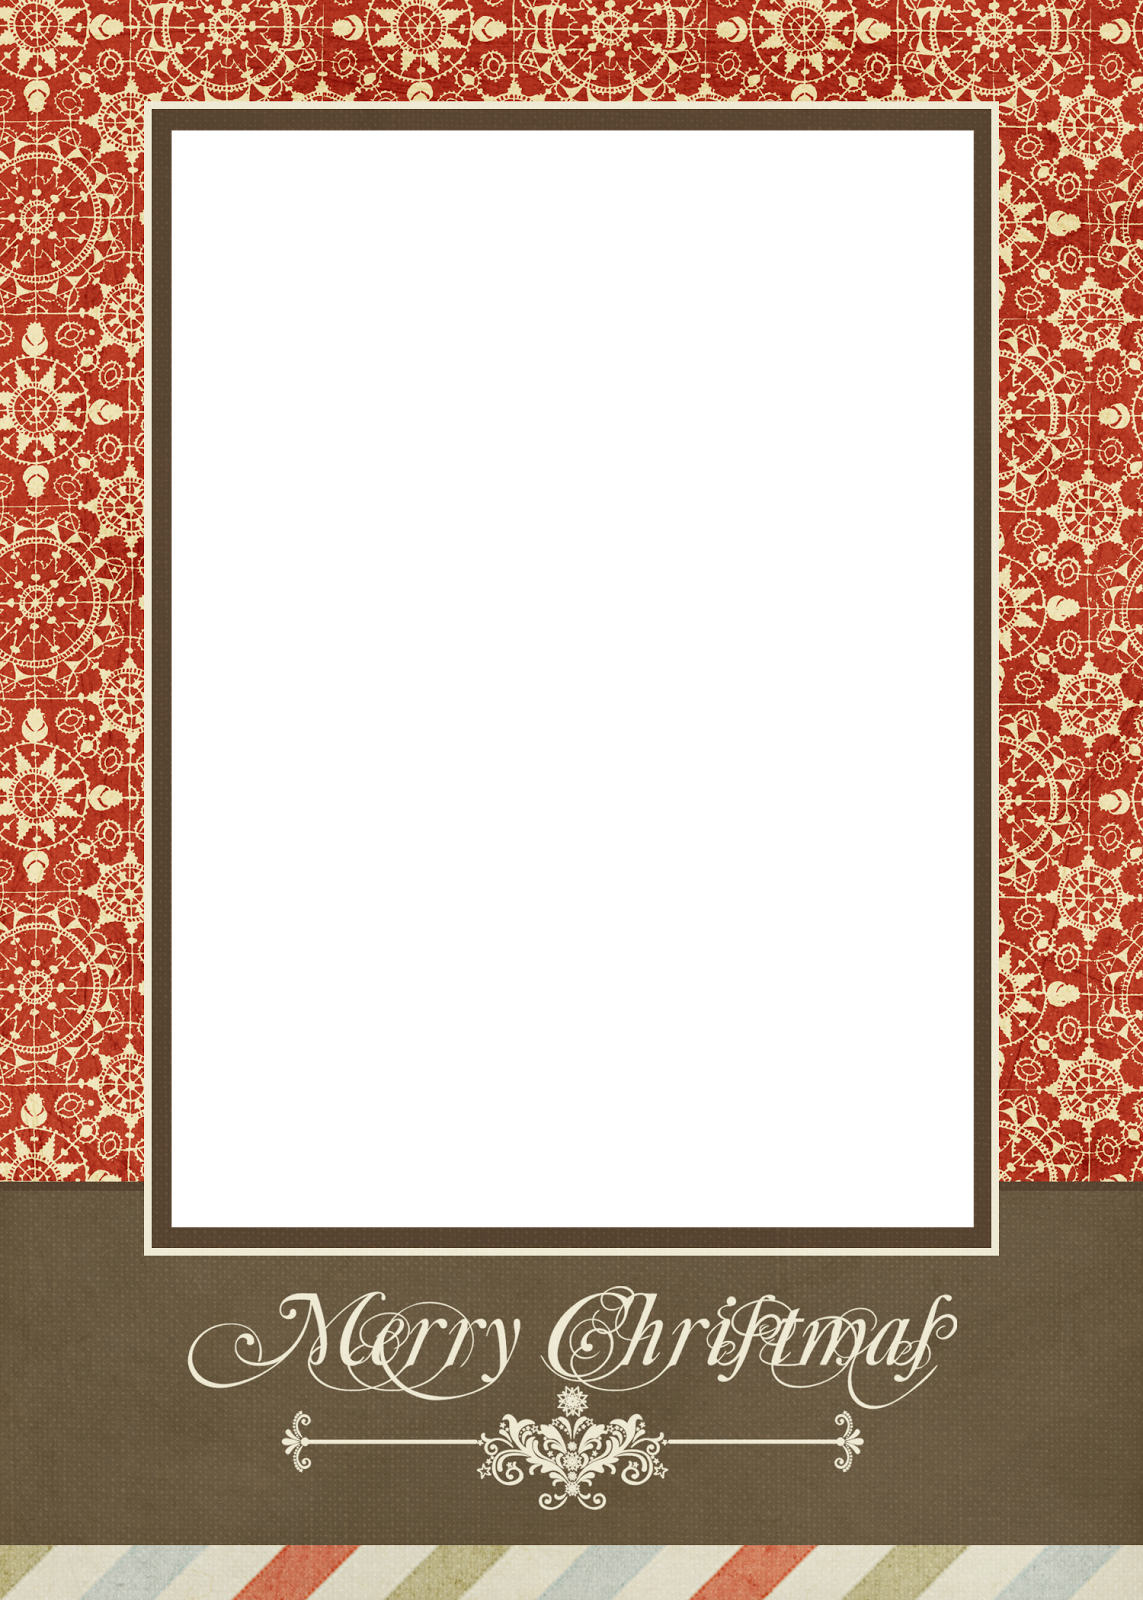 Vintage Christmas Card Templates Free